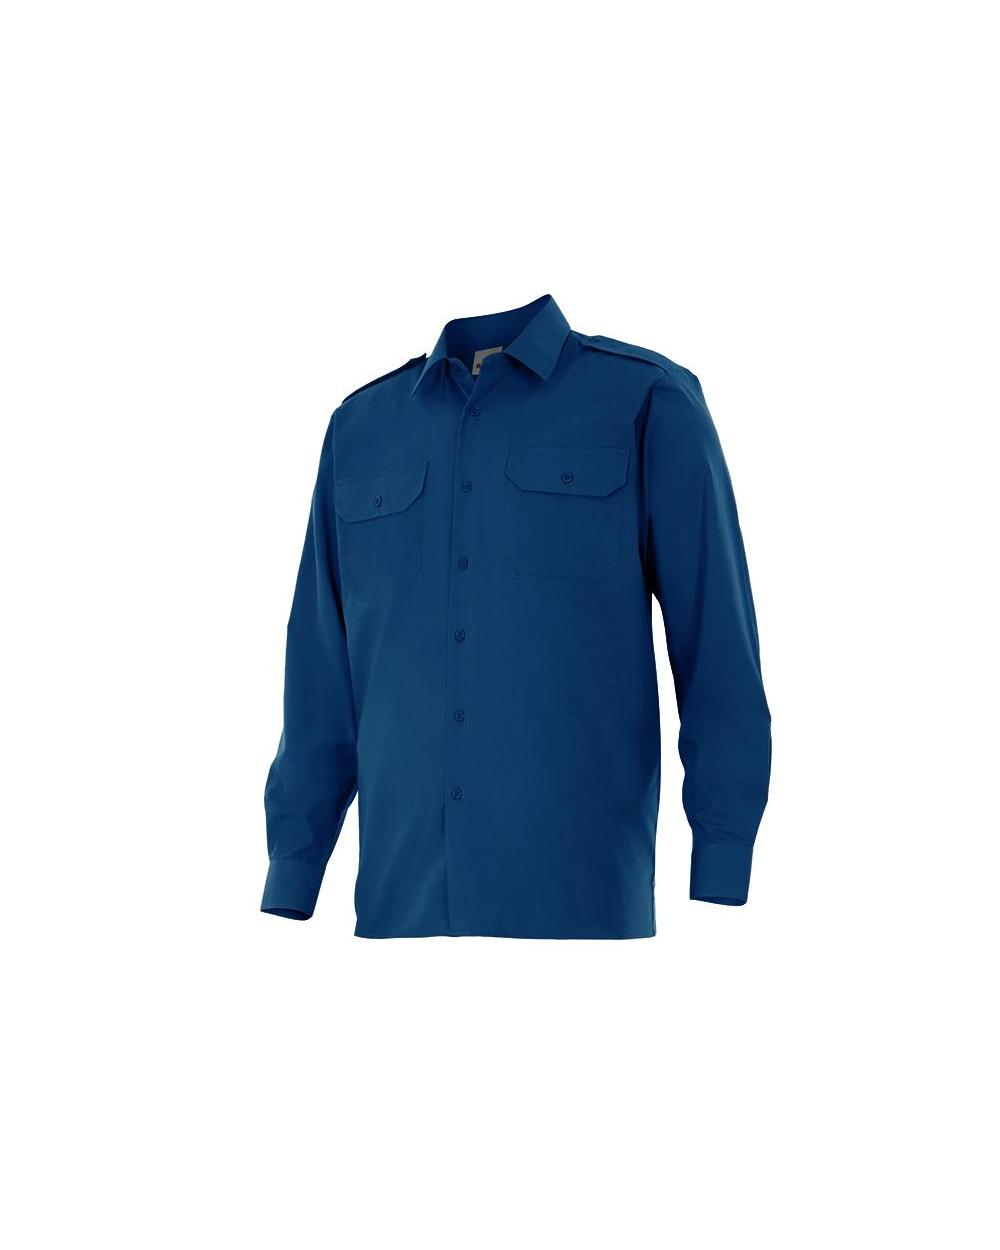 Comprar Camisa manga larga con galoneras serie 530 online barato Azul Marino